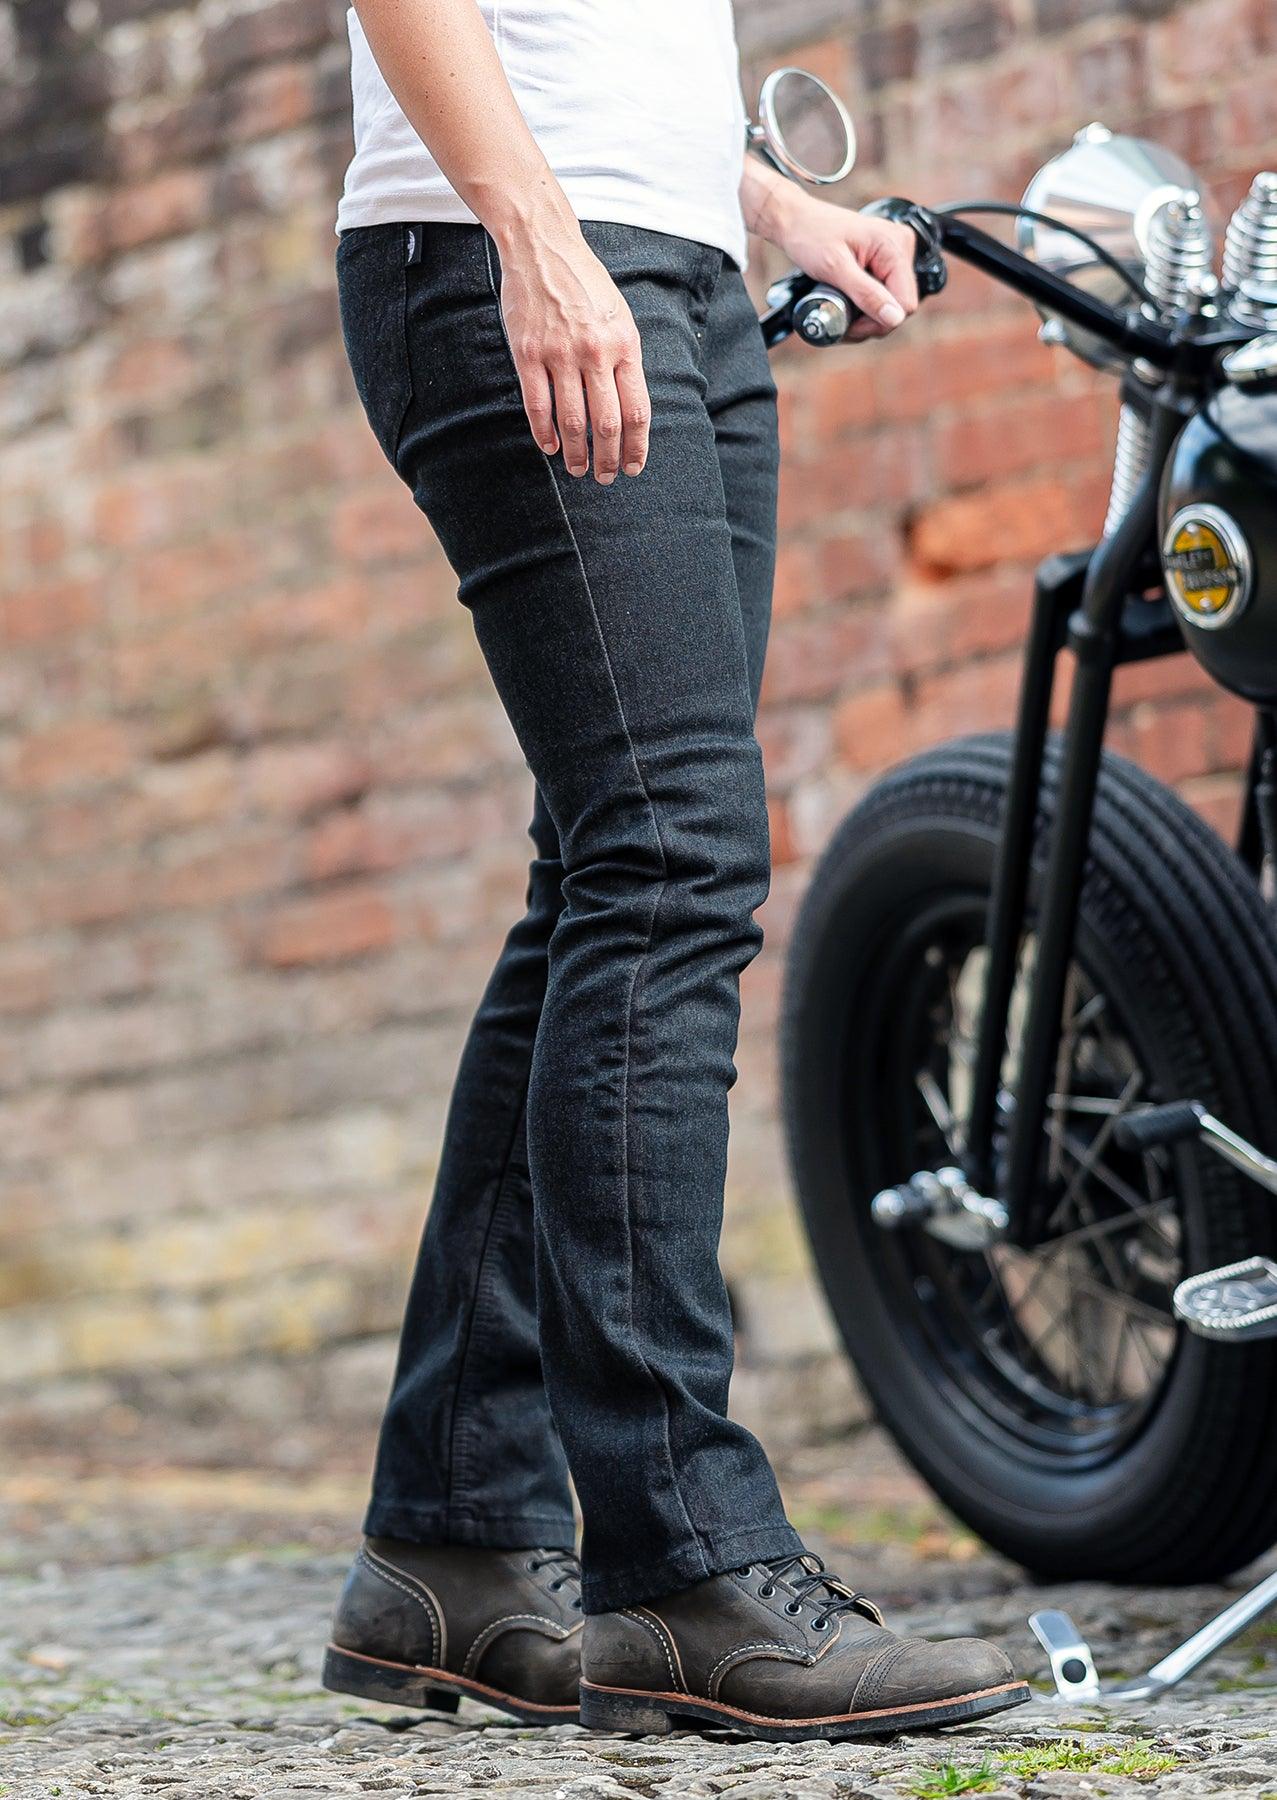 Taranis AAA-rated single layer ladies motorcycle jeans in black